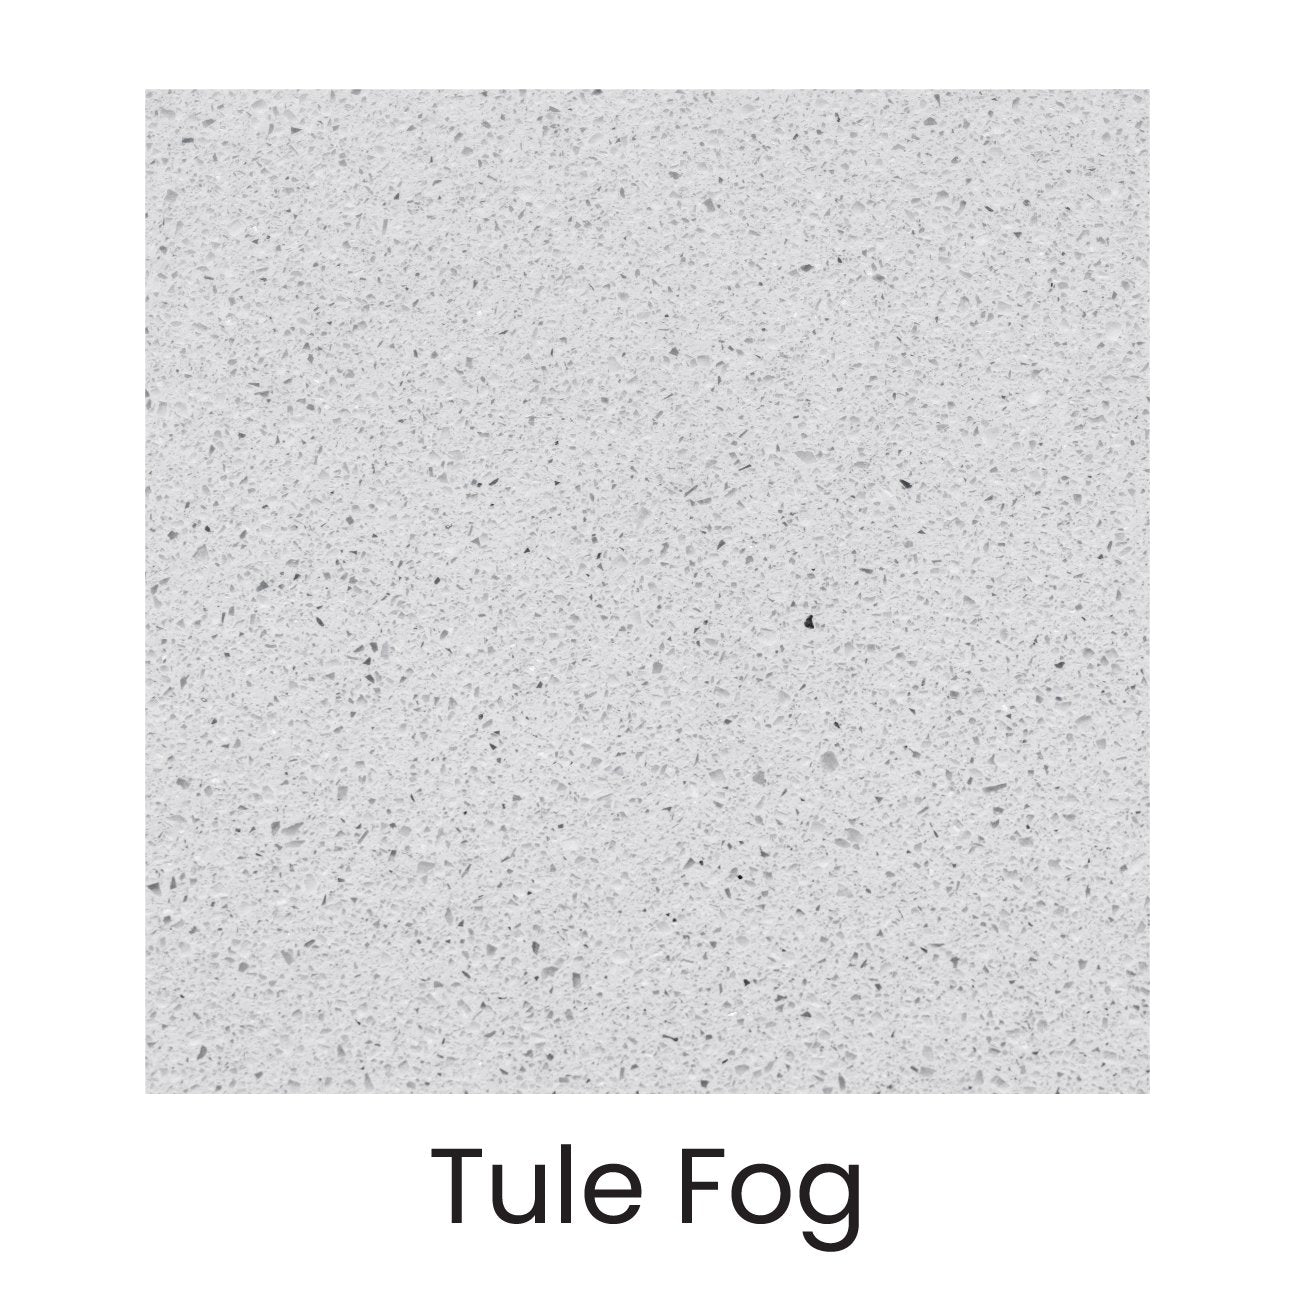 #concrete color_tule fog